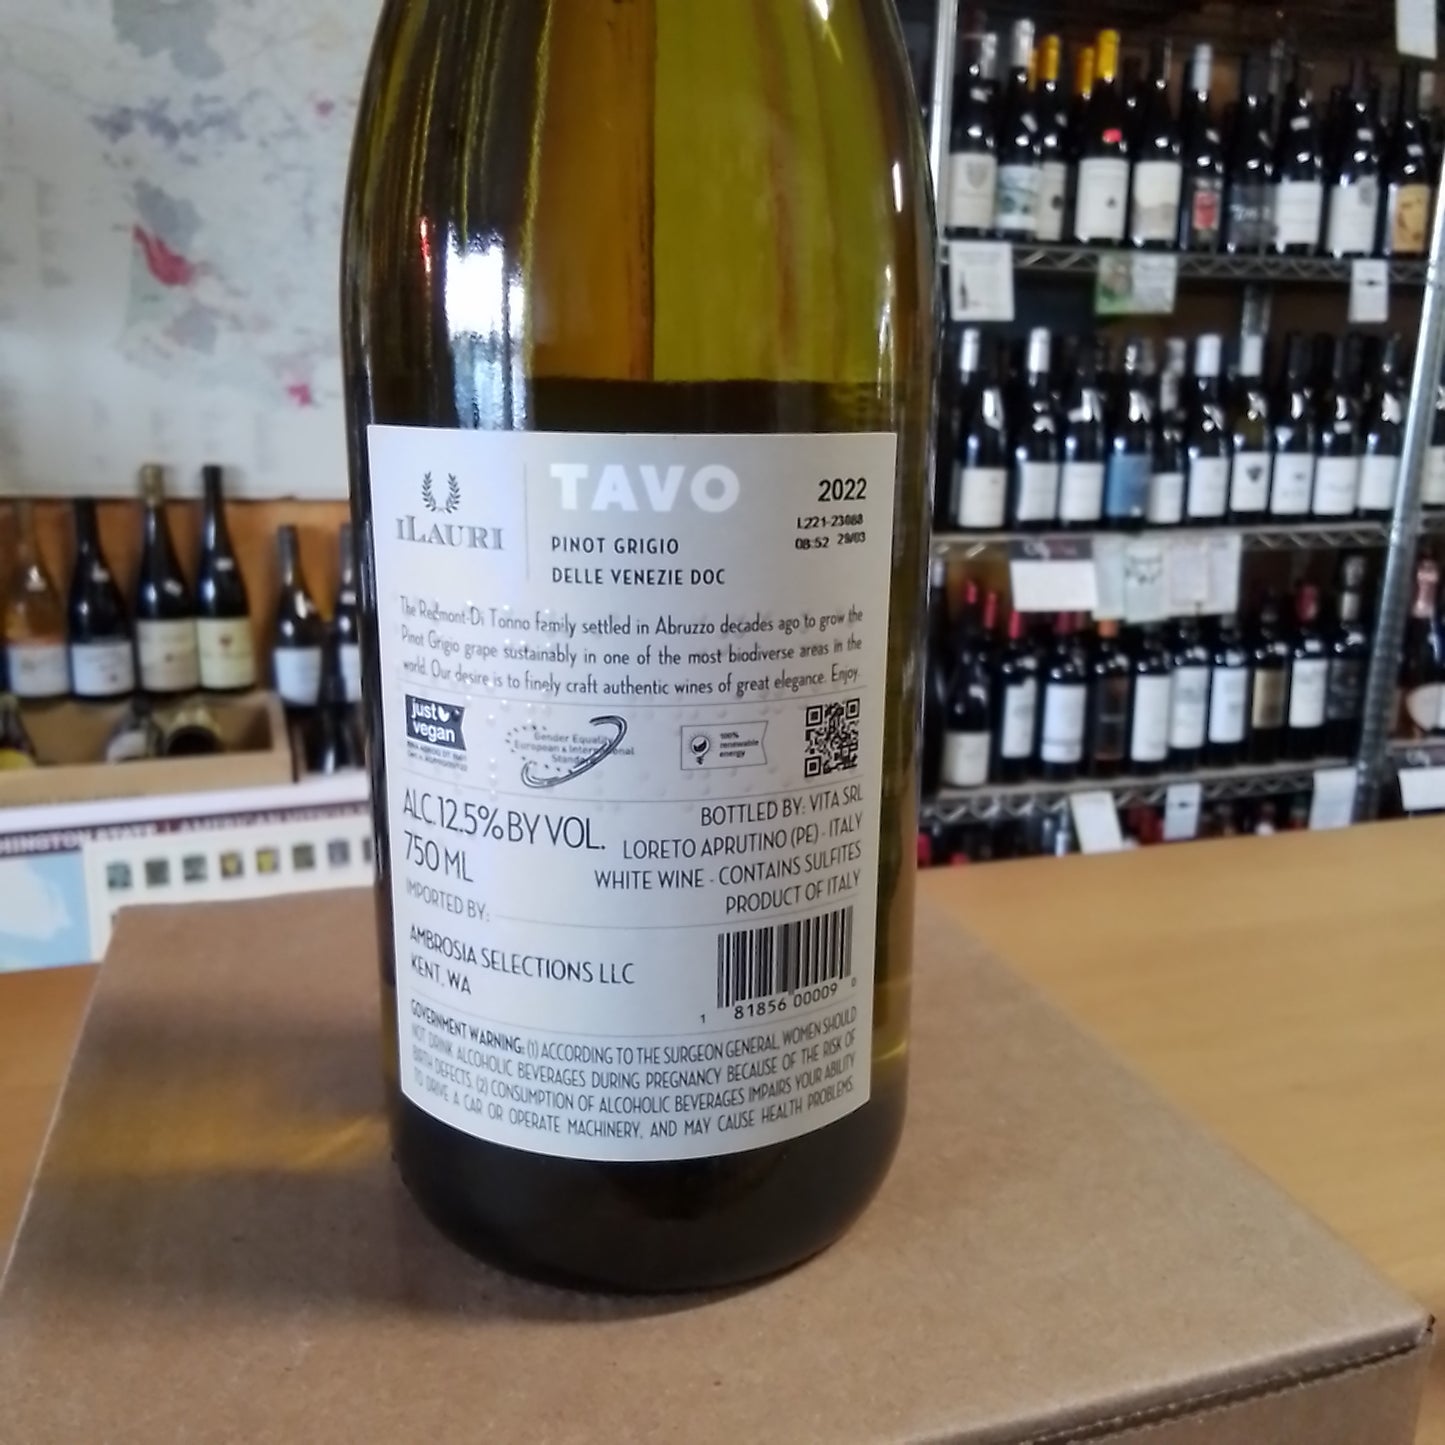 ILAURI 2022 Pinot Grigio 'Tavo' (Delle Venezie, Italy)